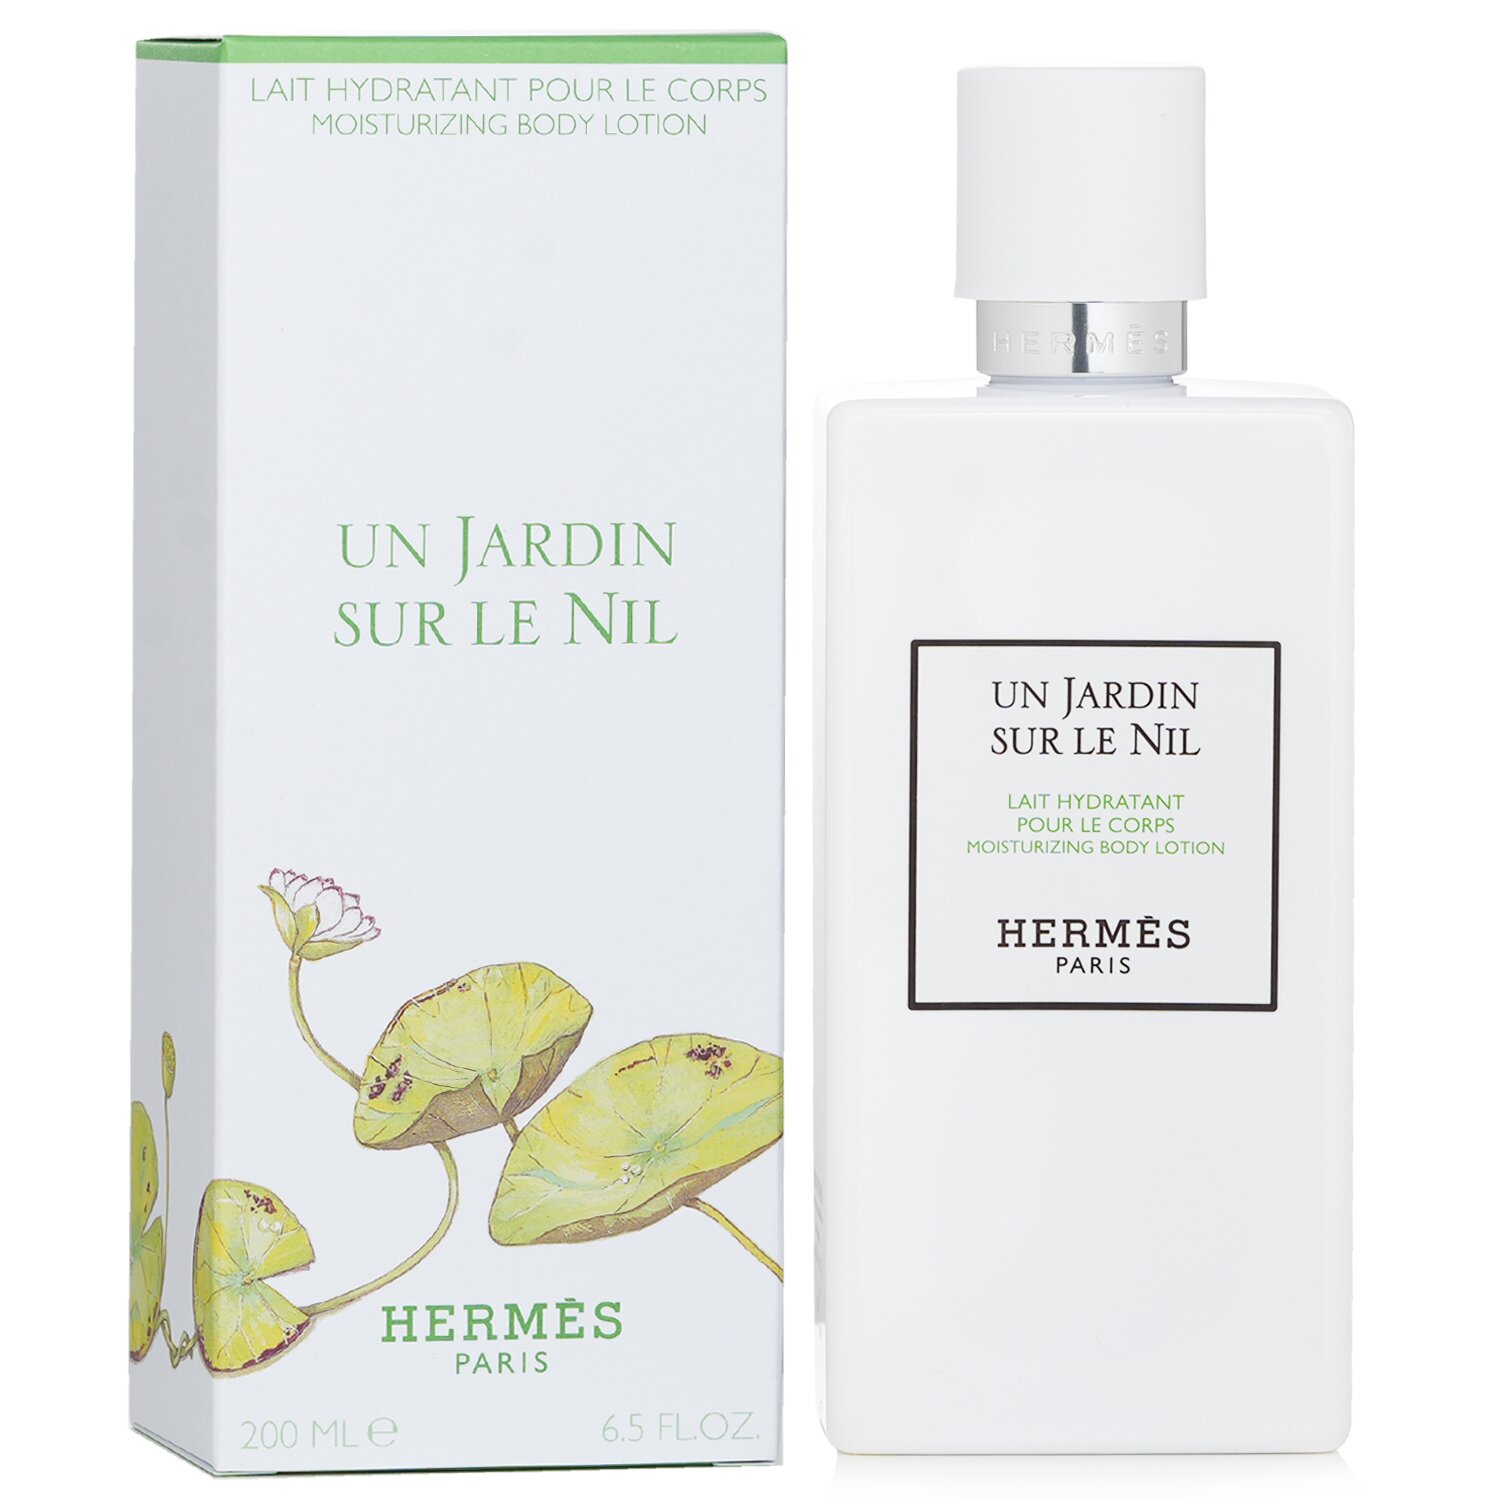 Hermes Perfumowany balsam do ciała Un Jardin Sur Le Nil 200ml/6.5oz